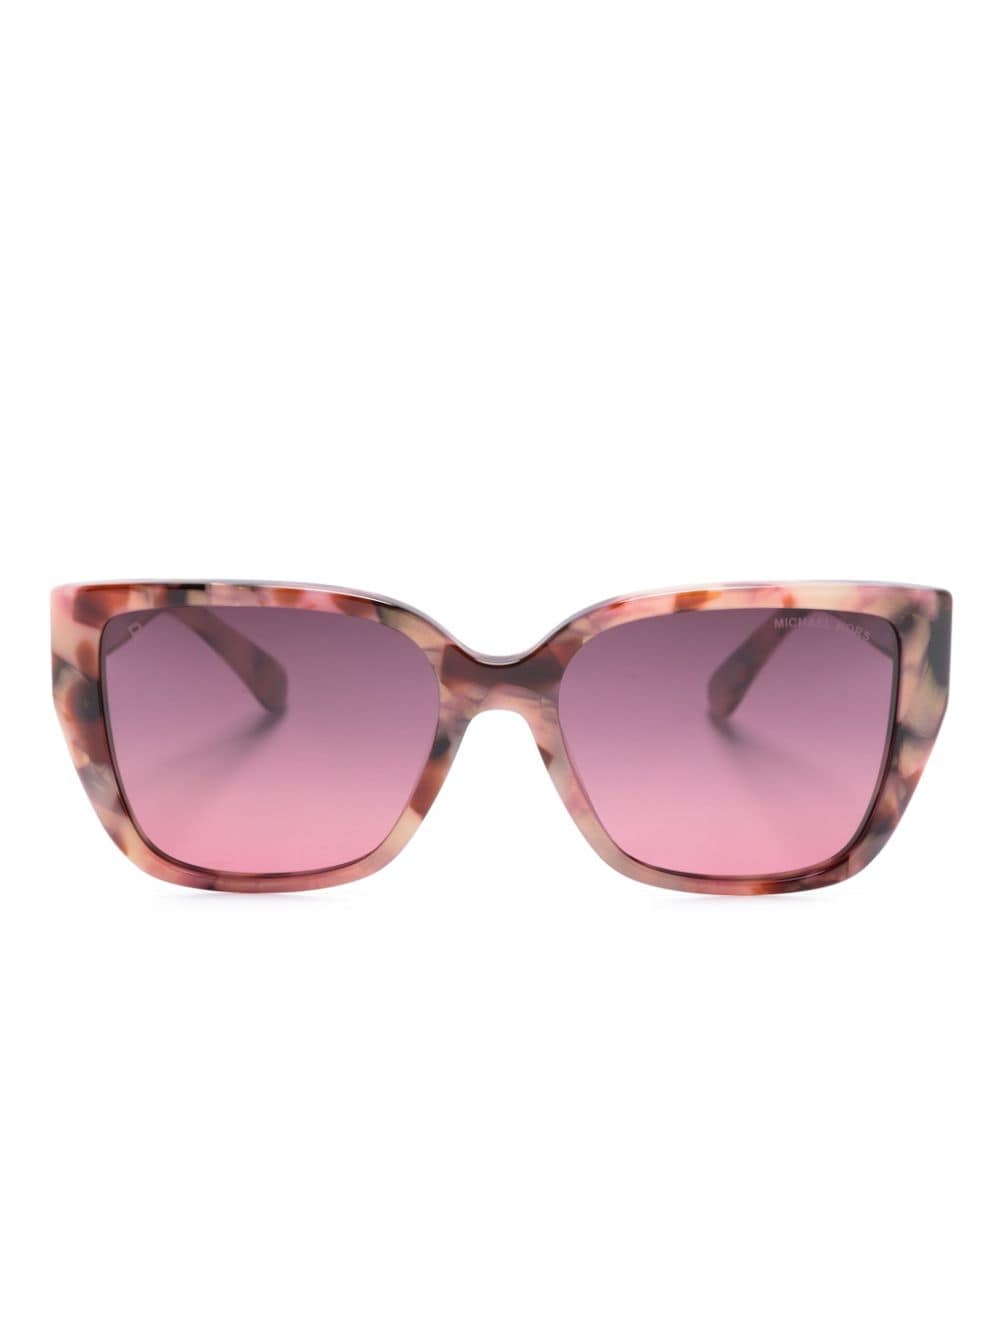 Michael Kors Acadia square-frame sunglasses - Pink von Michael Kors